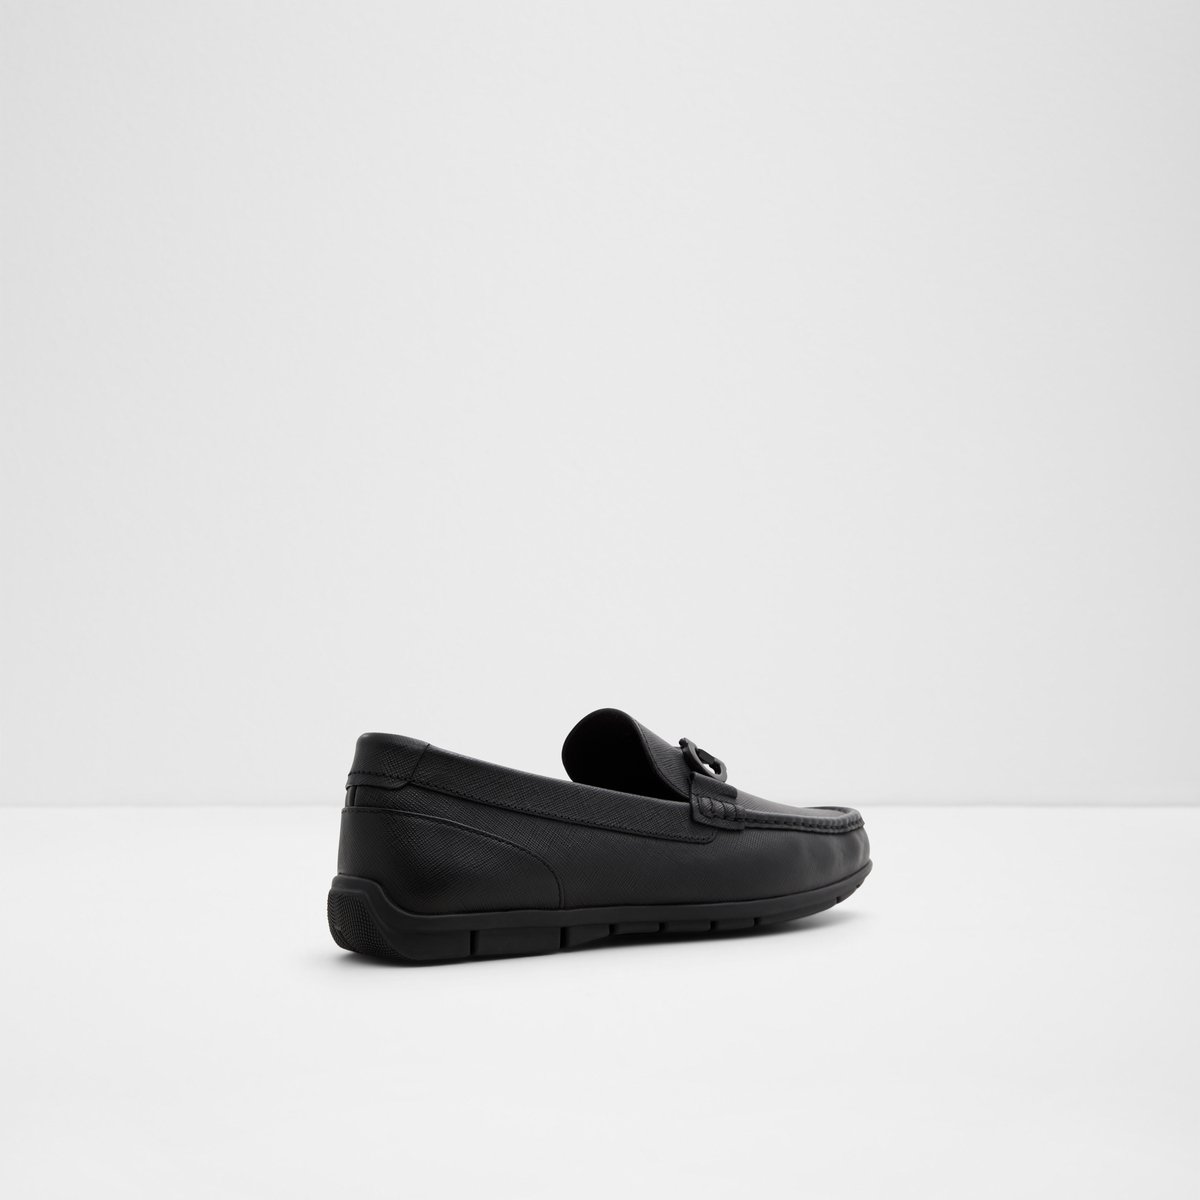 Orlovoflex Open Black Men's Casual Shoes | ALDO Canada